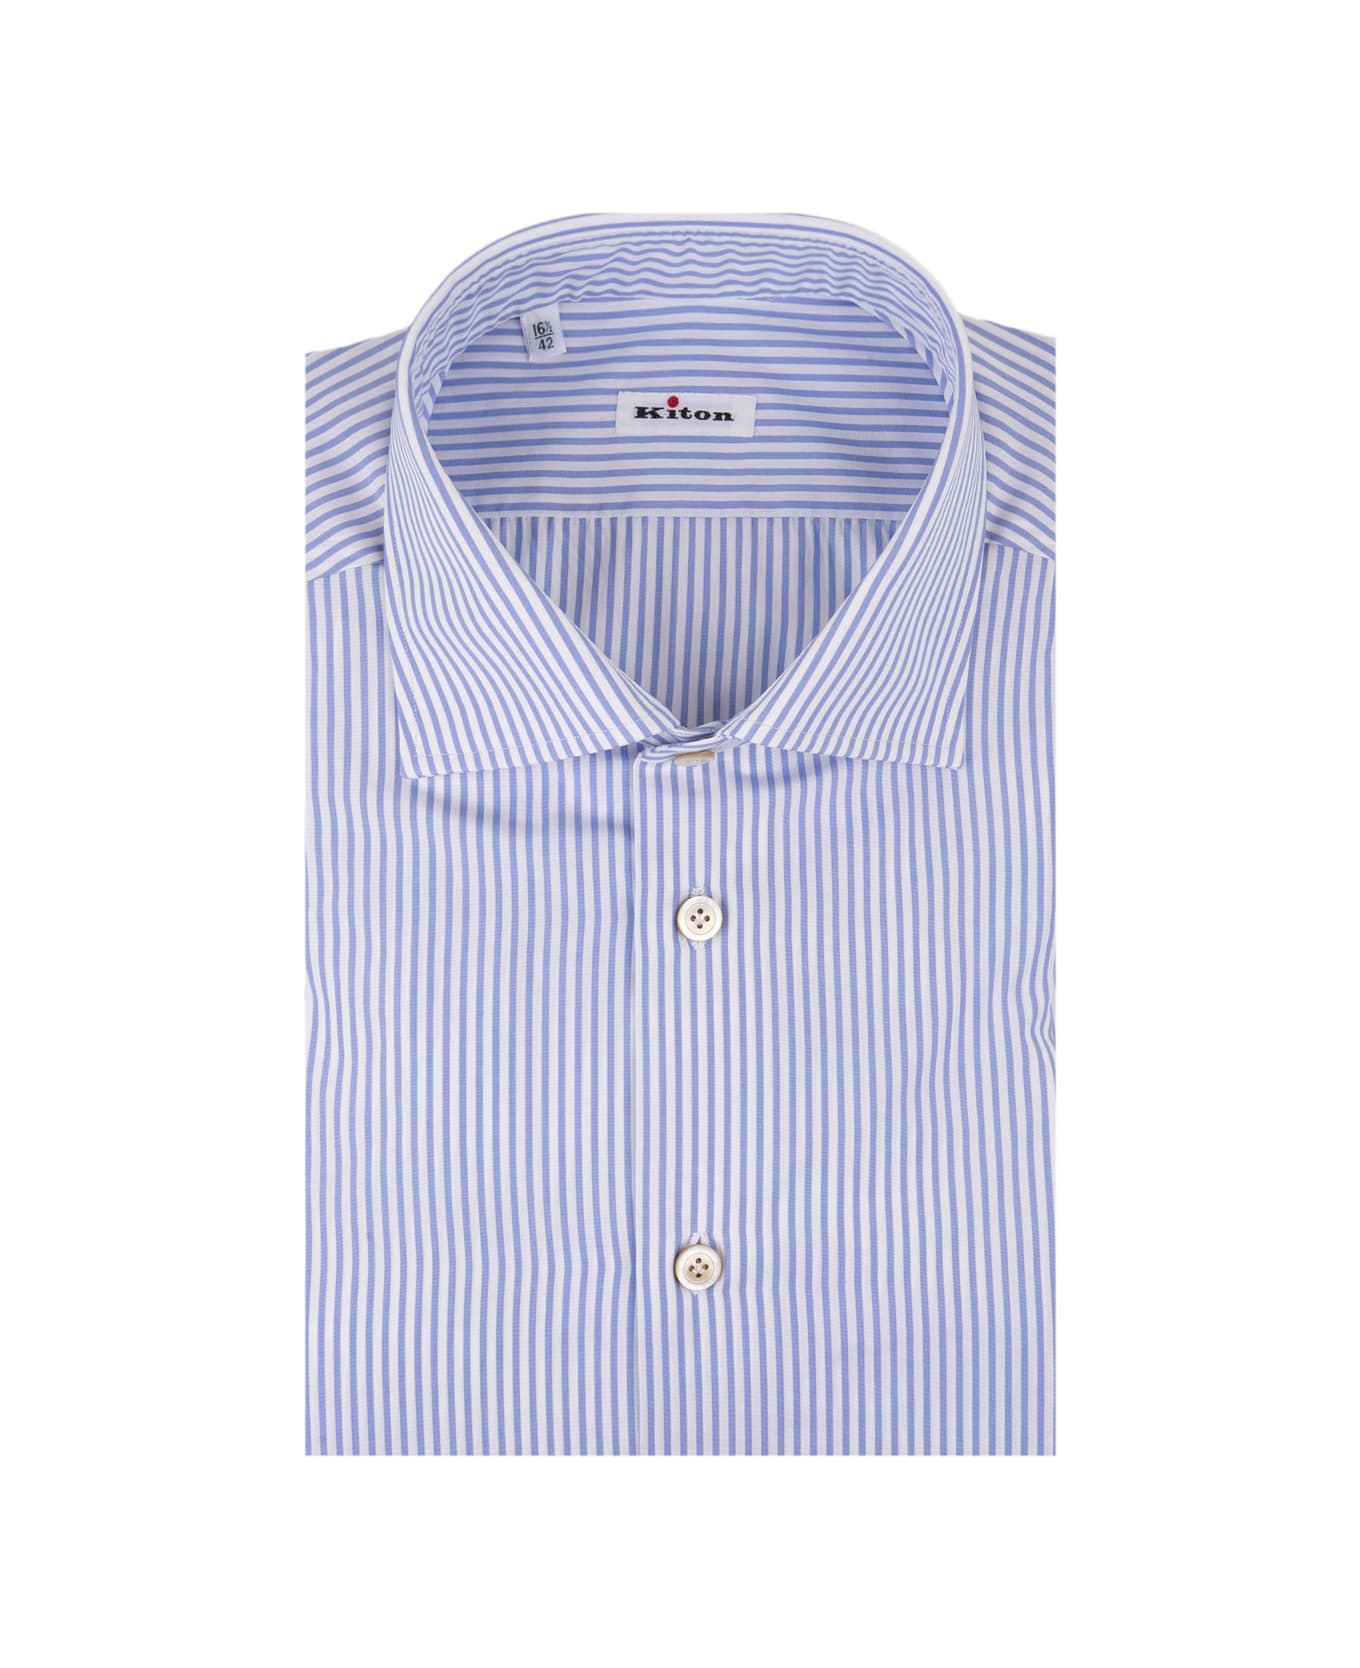 Kiton Light Blue And White Striped Classic Shirt - Blue シャツ